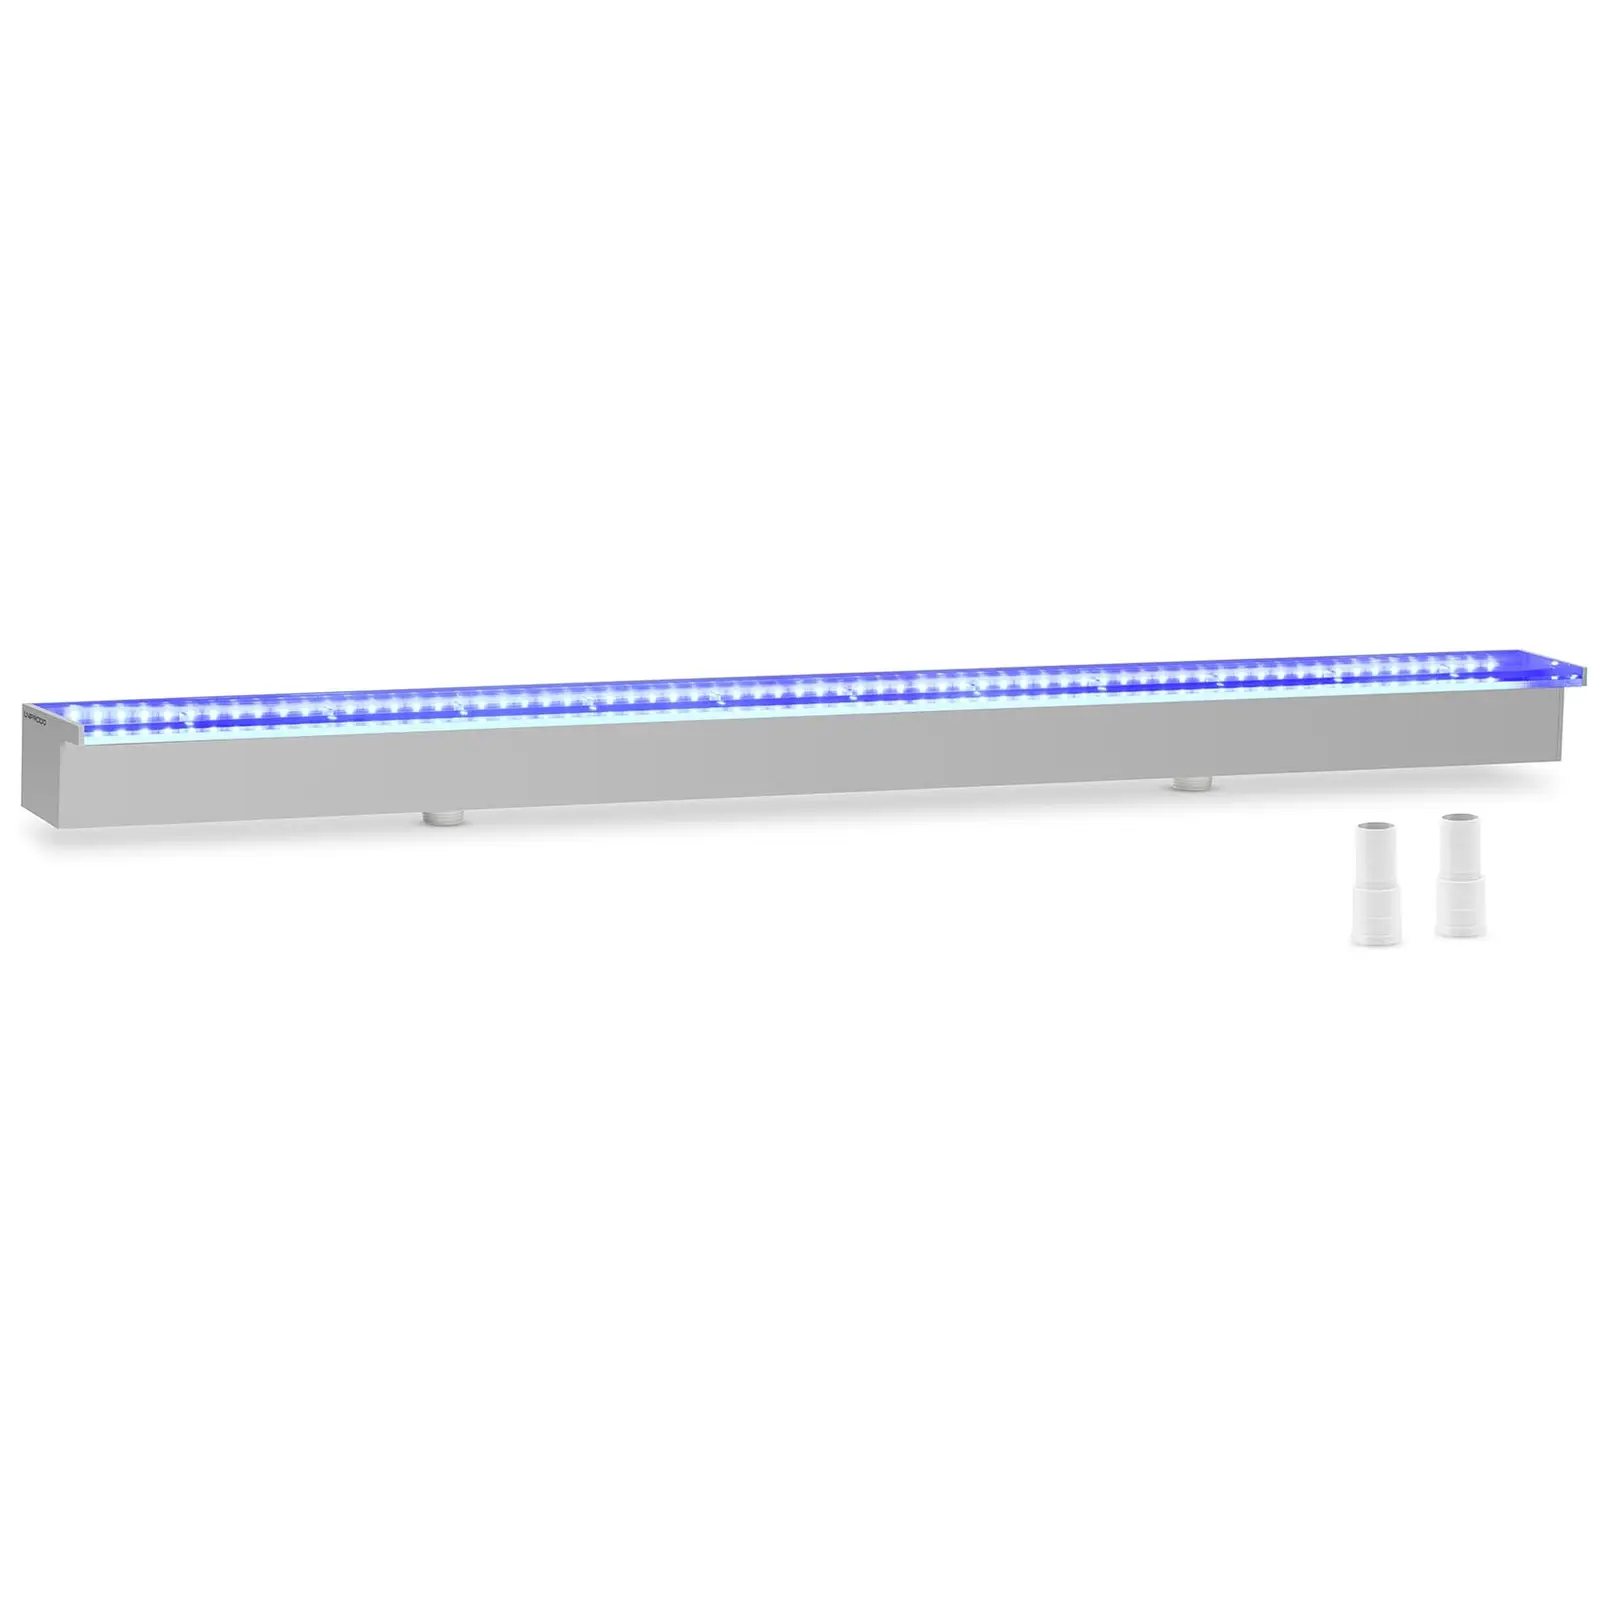 Schwalldusche - 120 cm - LED-Beleuchtung - Blau / Weiß